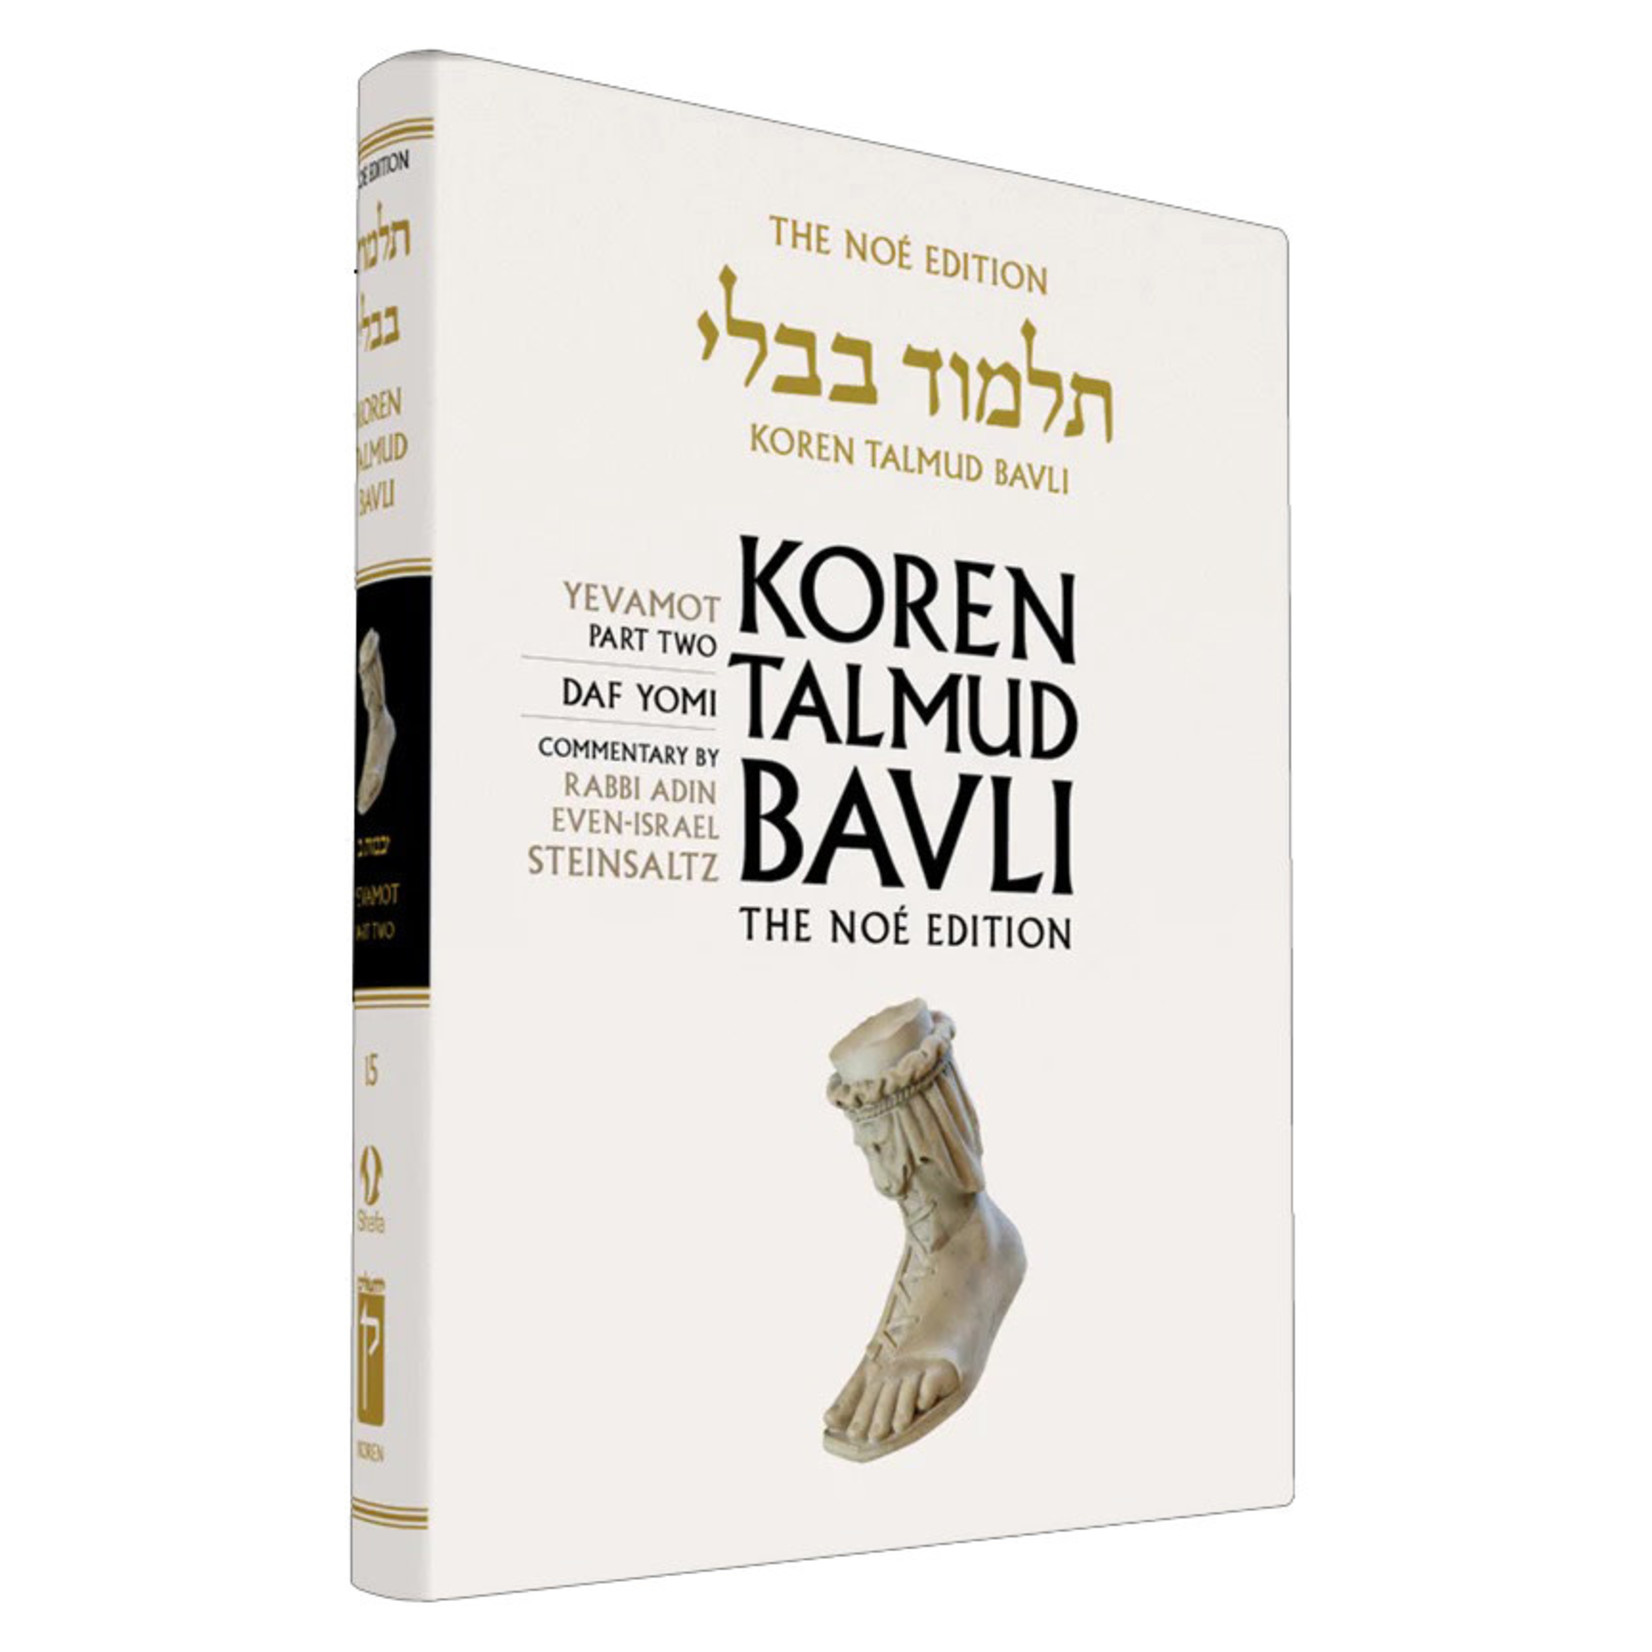 Yevamot Part 2 - Koren Talmud Bavli Noé Edition Daf Yomi Size - Volume 15